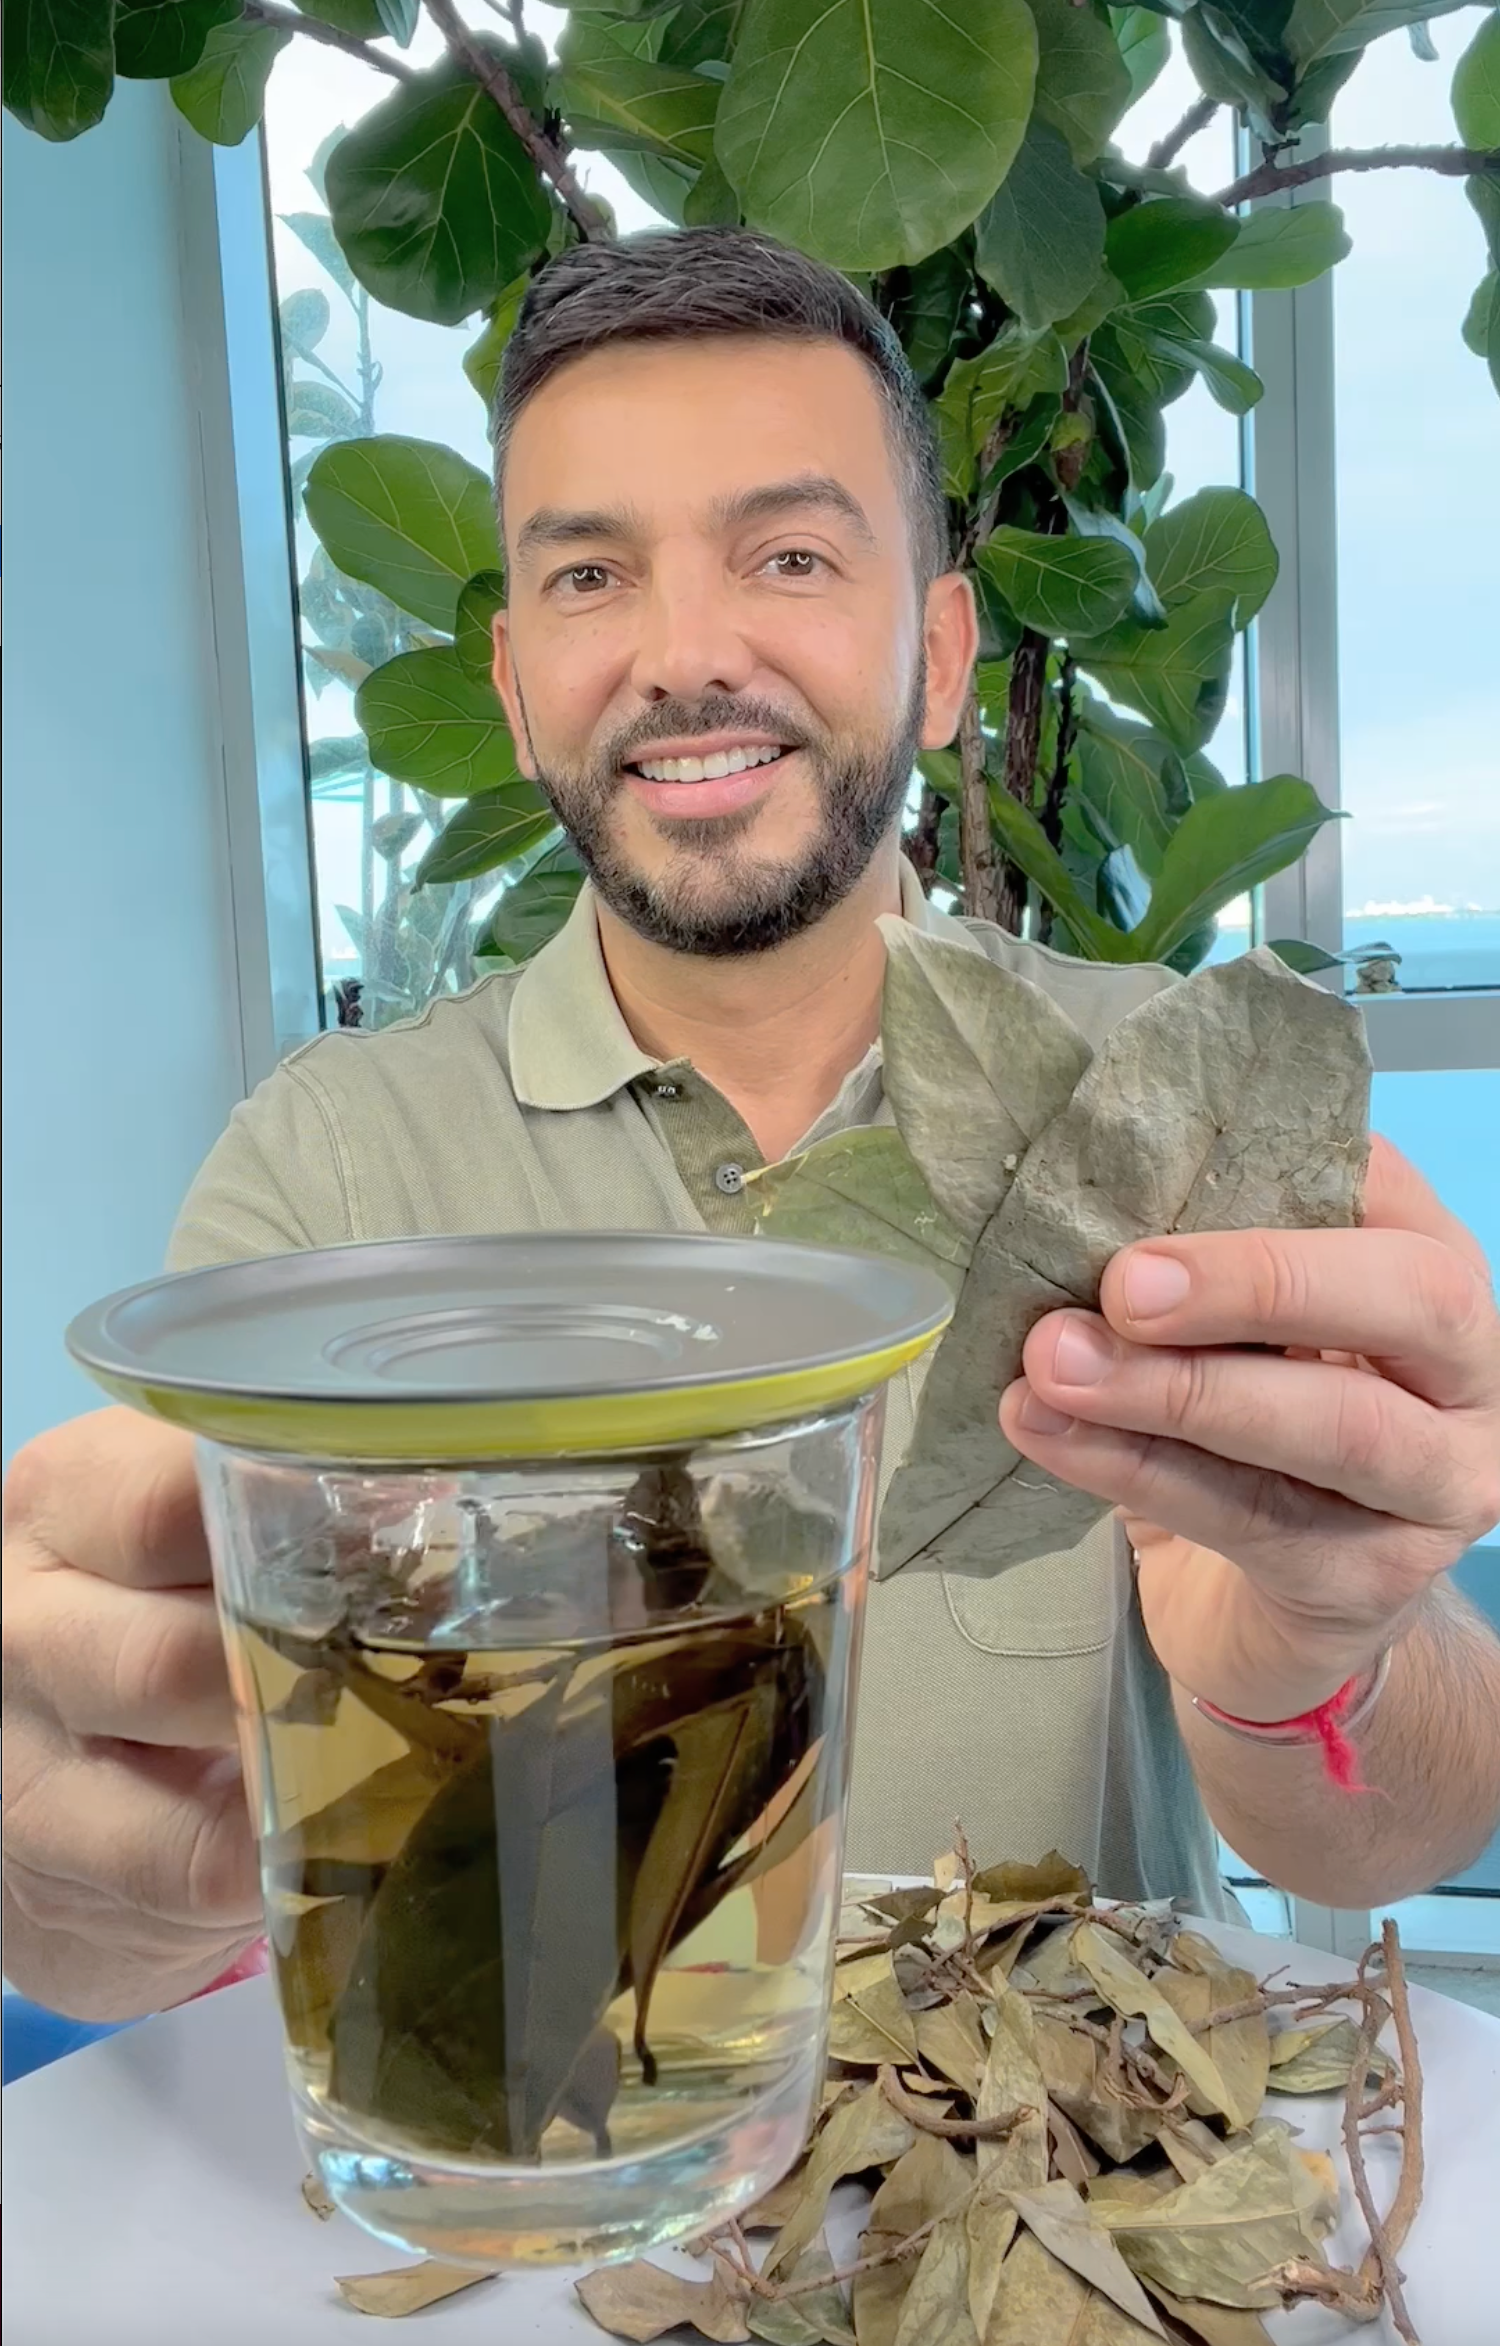 Cargar video: En este video te explico cómo tomar este maravilloso té.